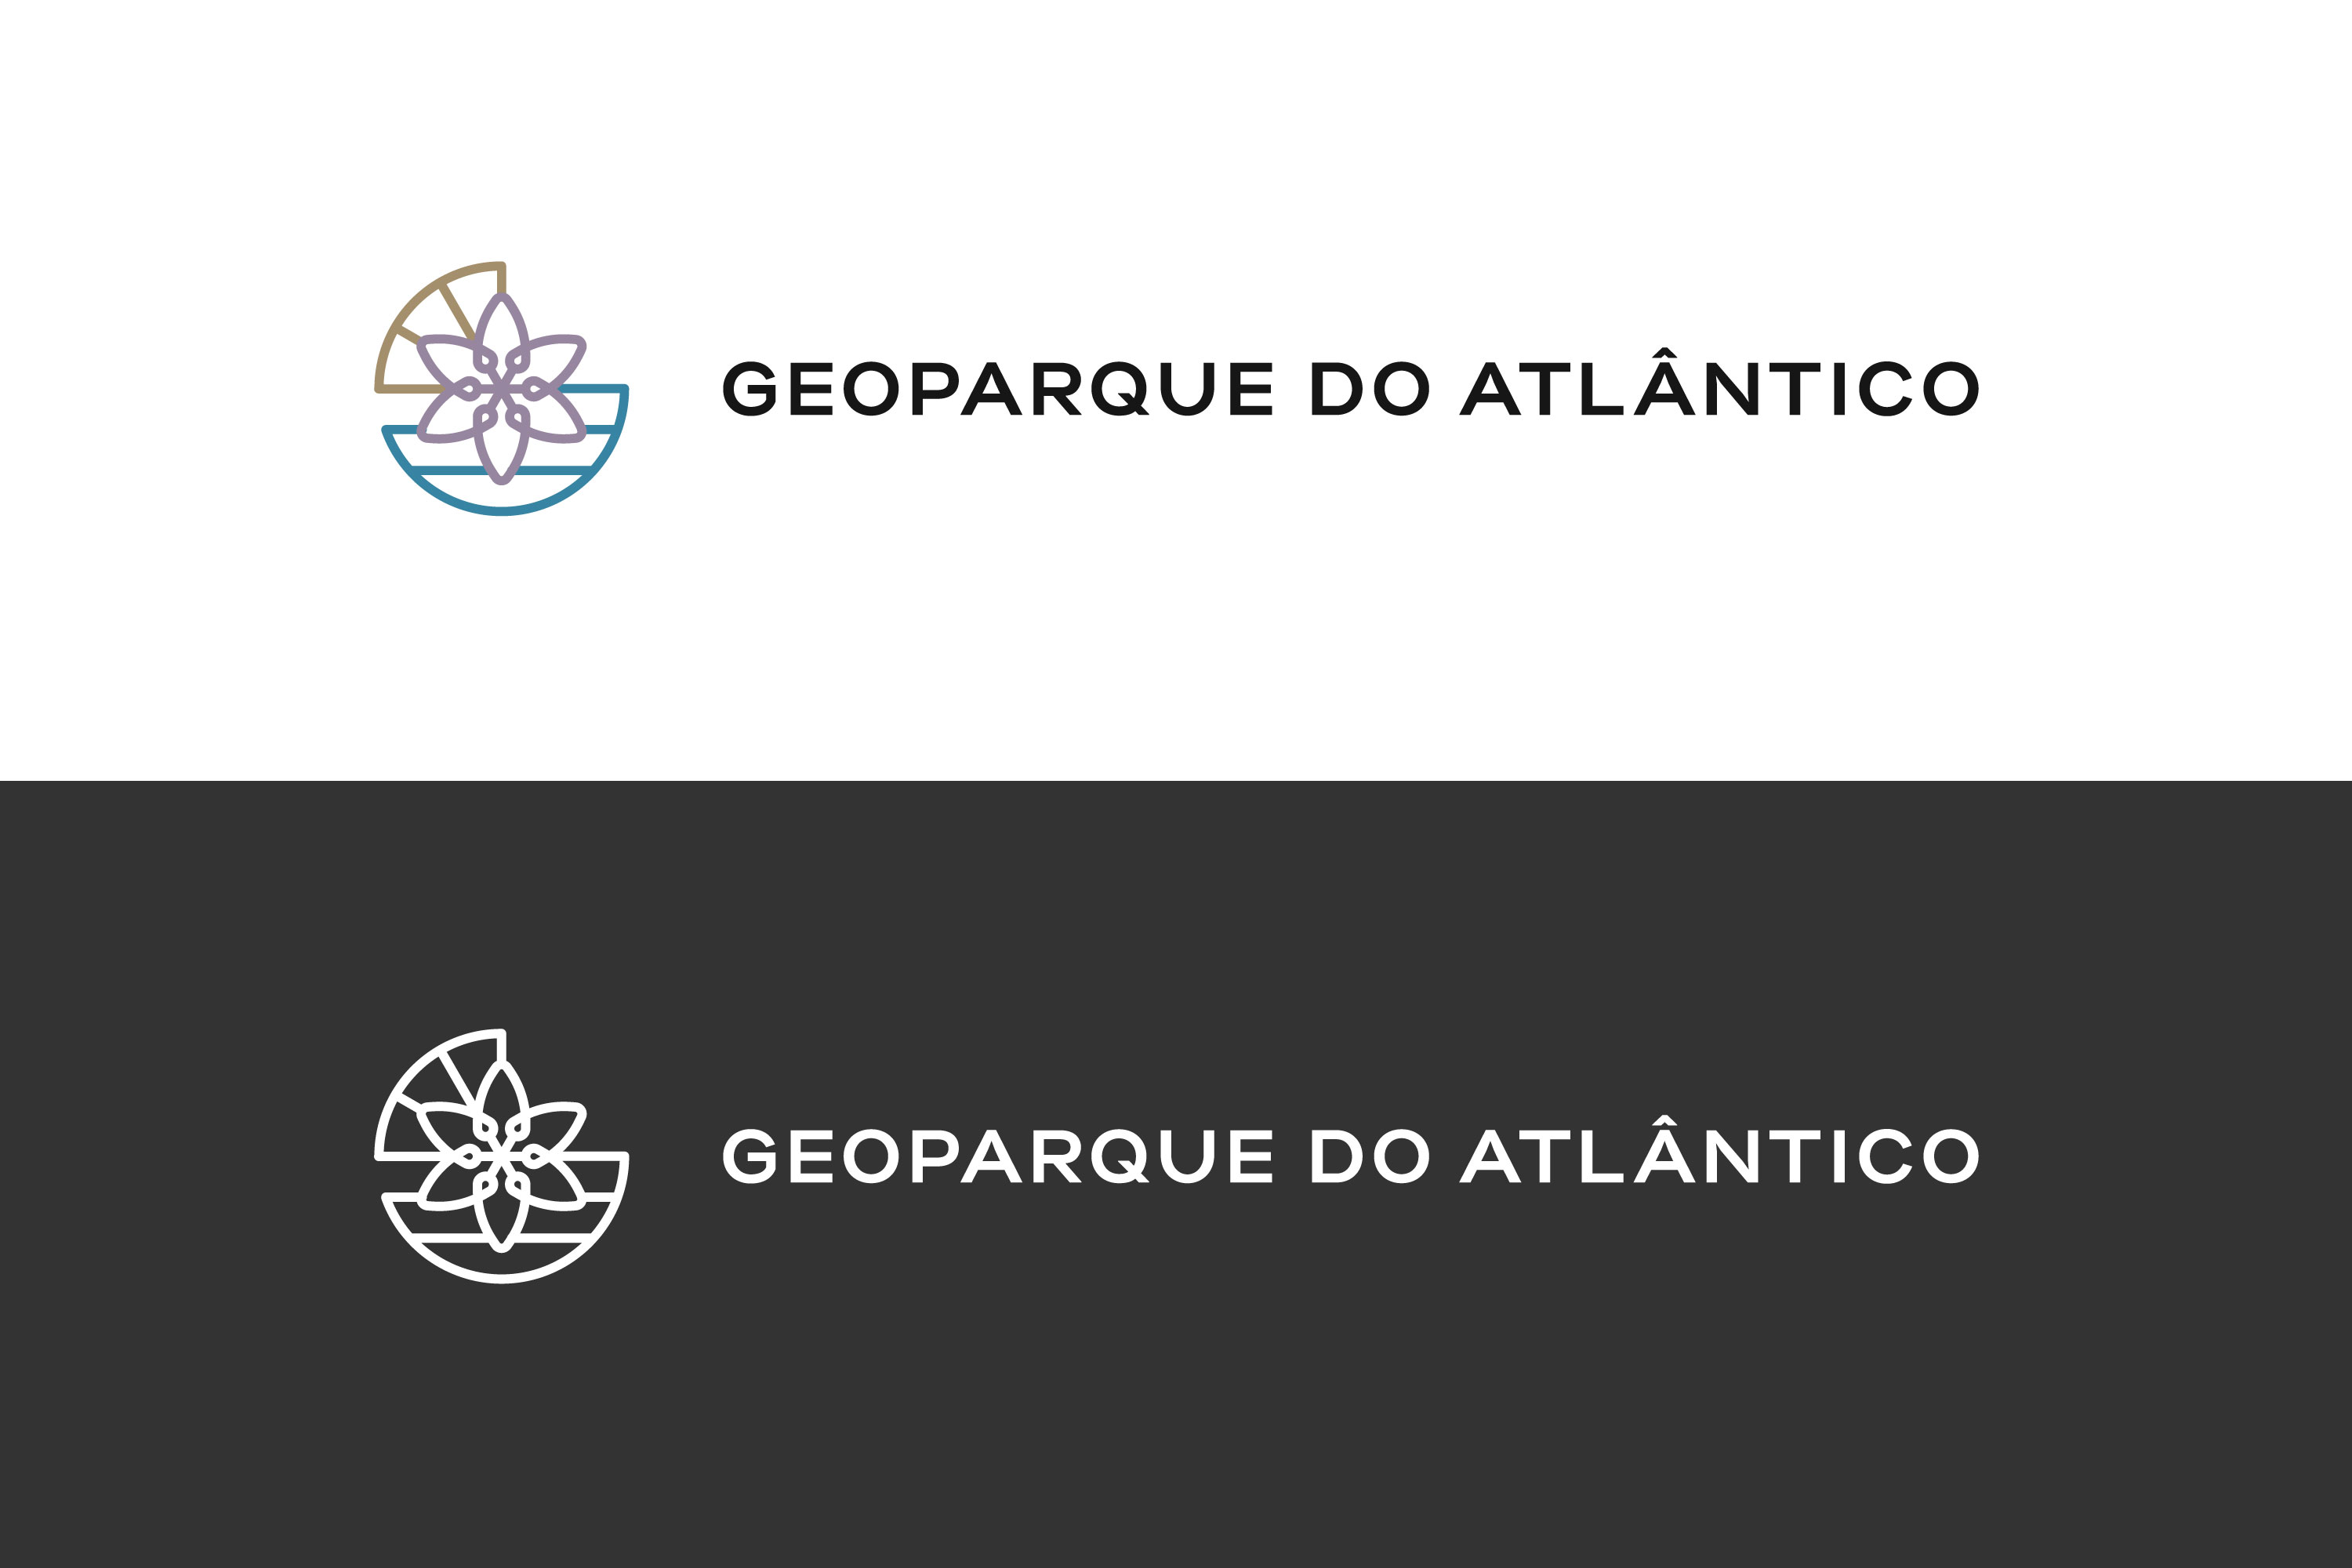 Geoparque do Atlântico